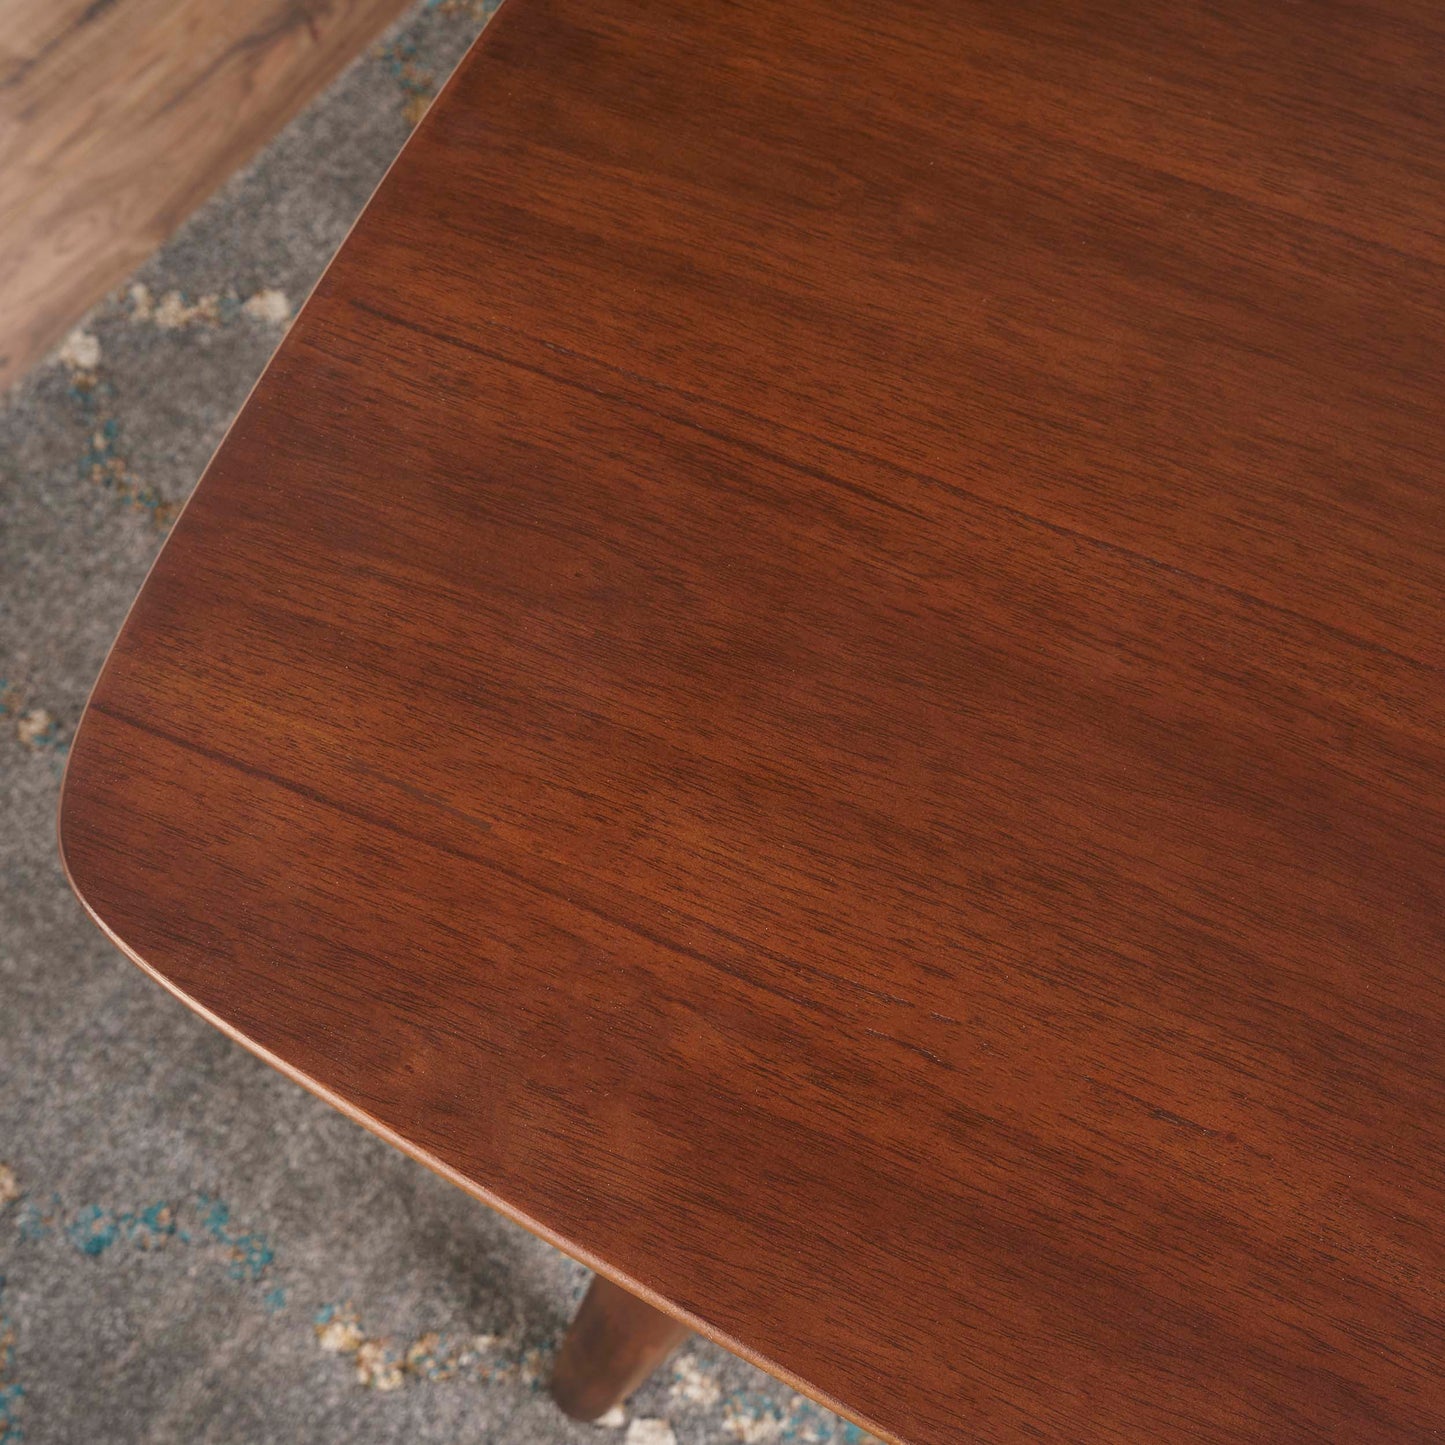 Kidman Wood Study Table with Faux Wood Overlay